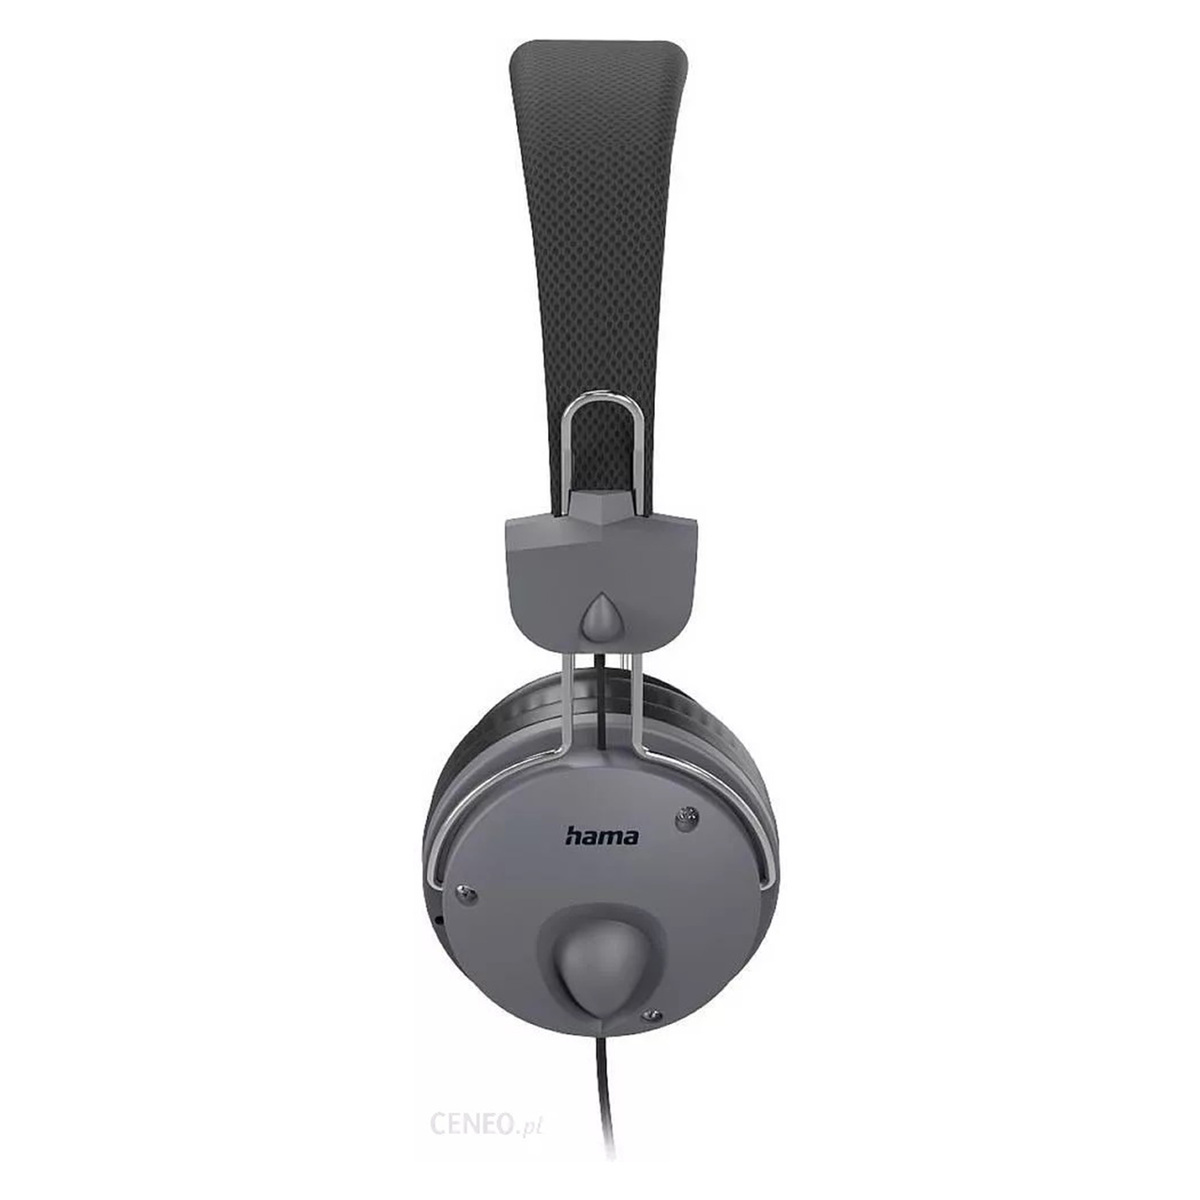 Hama Headphones with microphone "Fun4Phone", On-Ear Stereo Headphones, Black-184145